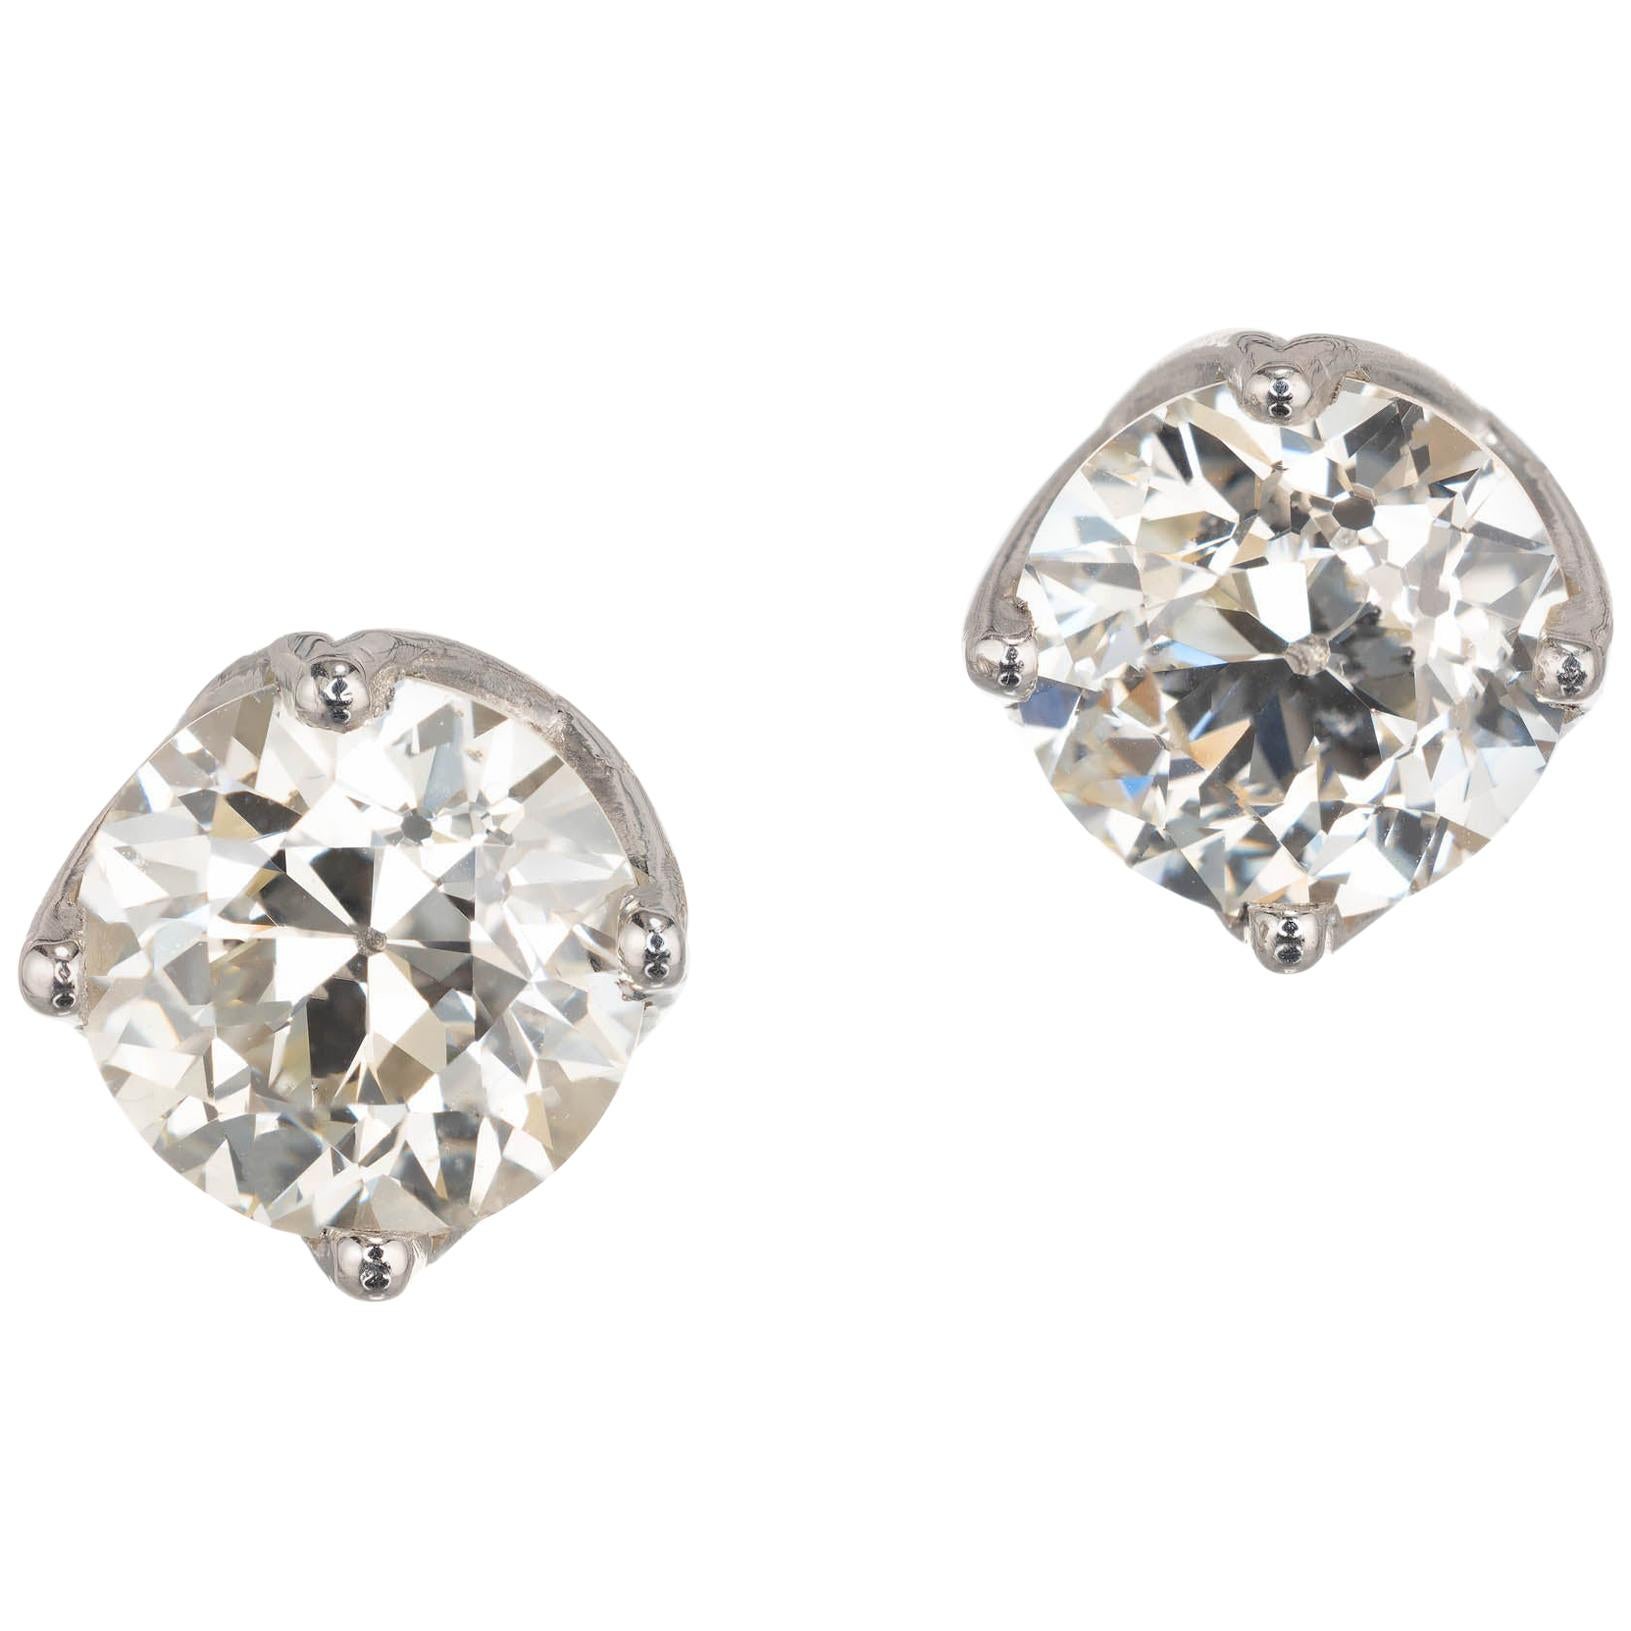 Peter Suchy GIA Certified 3.18 Carat Diamond Platinum Stud Earrings